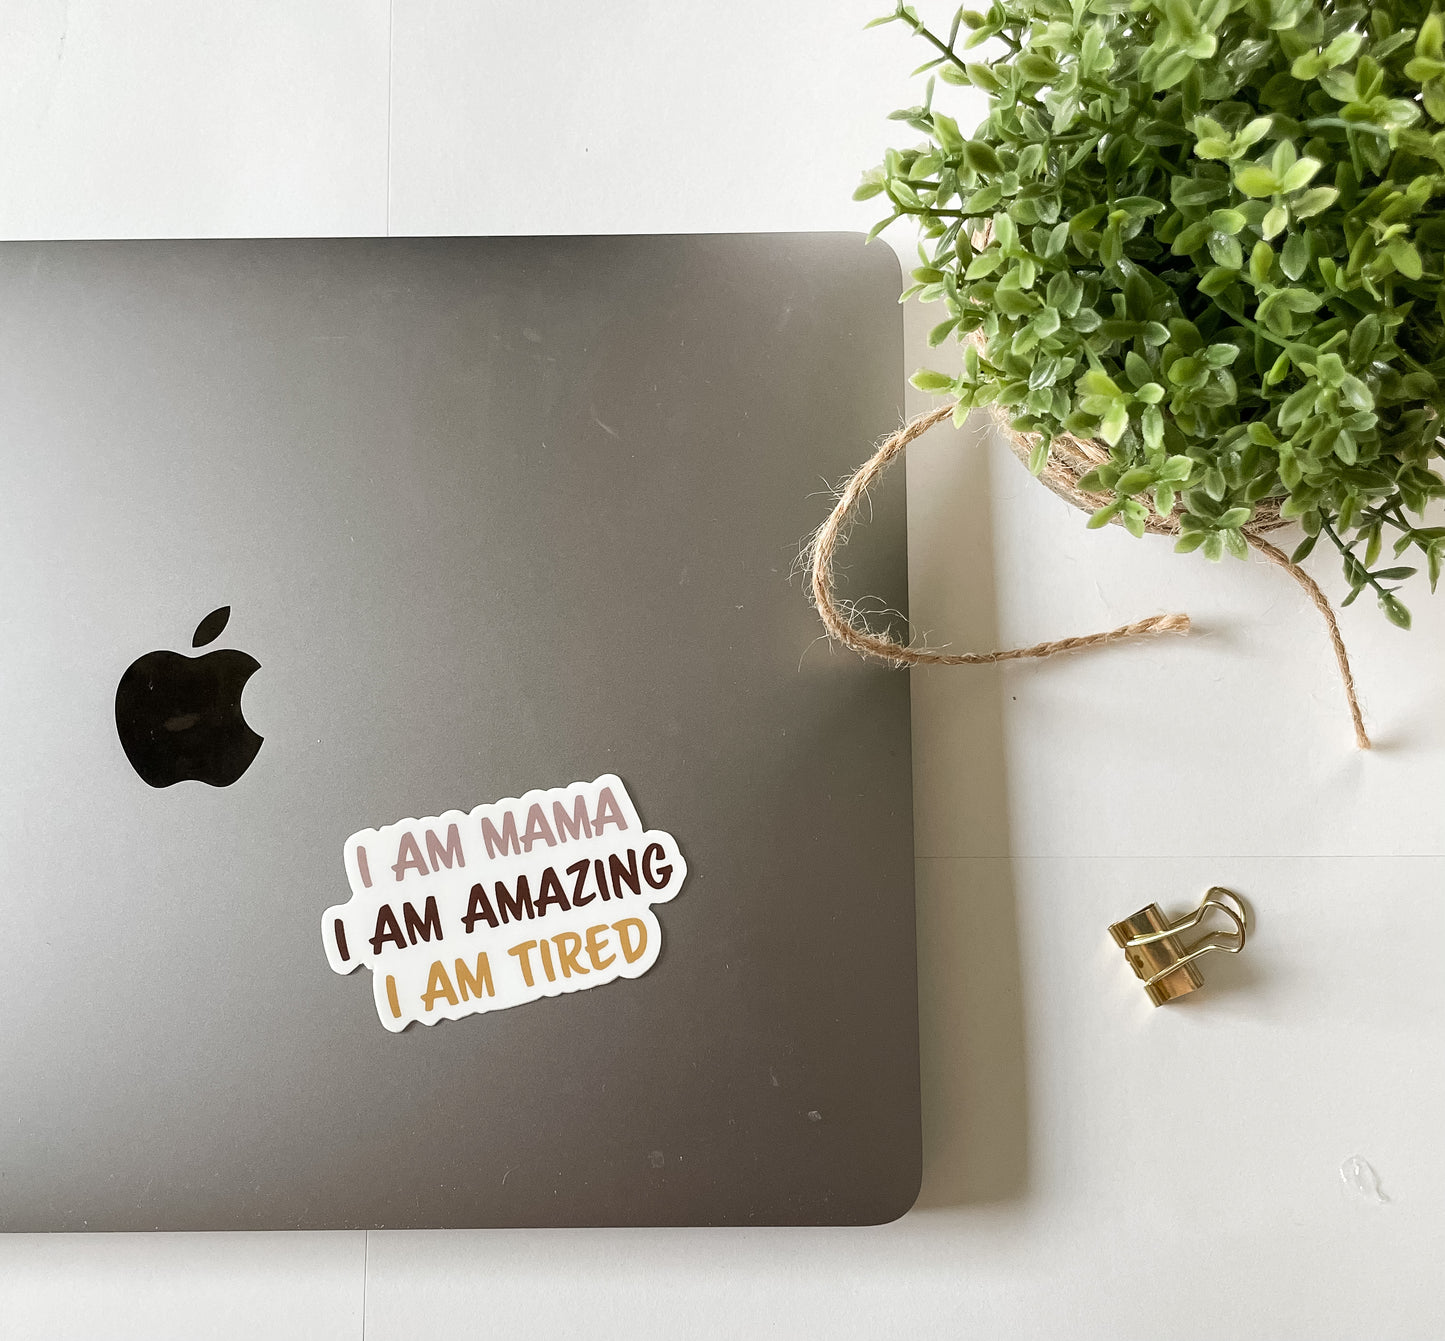 I Am Mama, I Am Amazing, I Am Tired vinyl sticker pictured on laptop